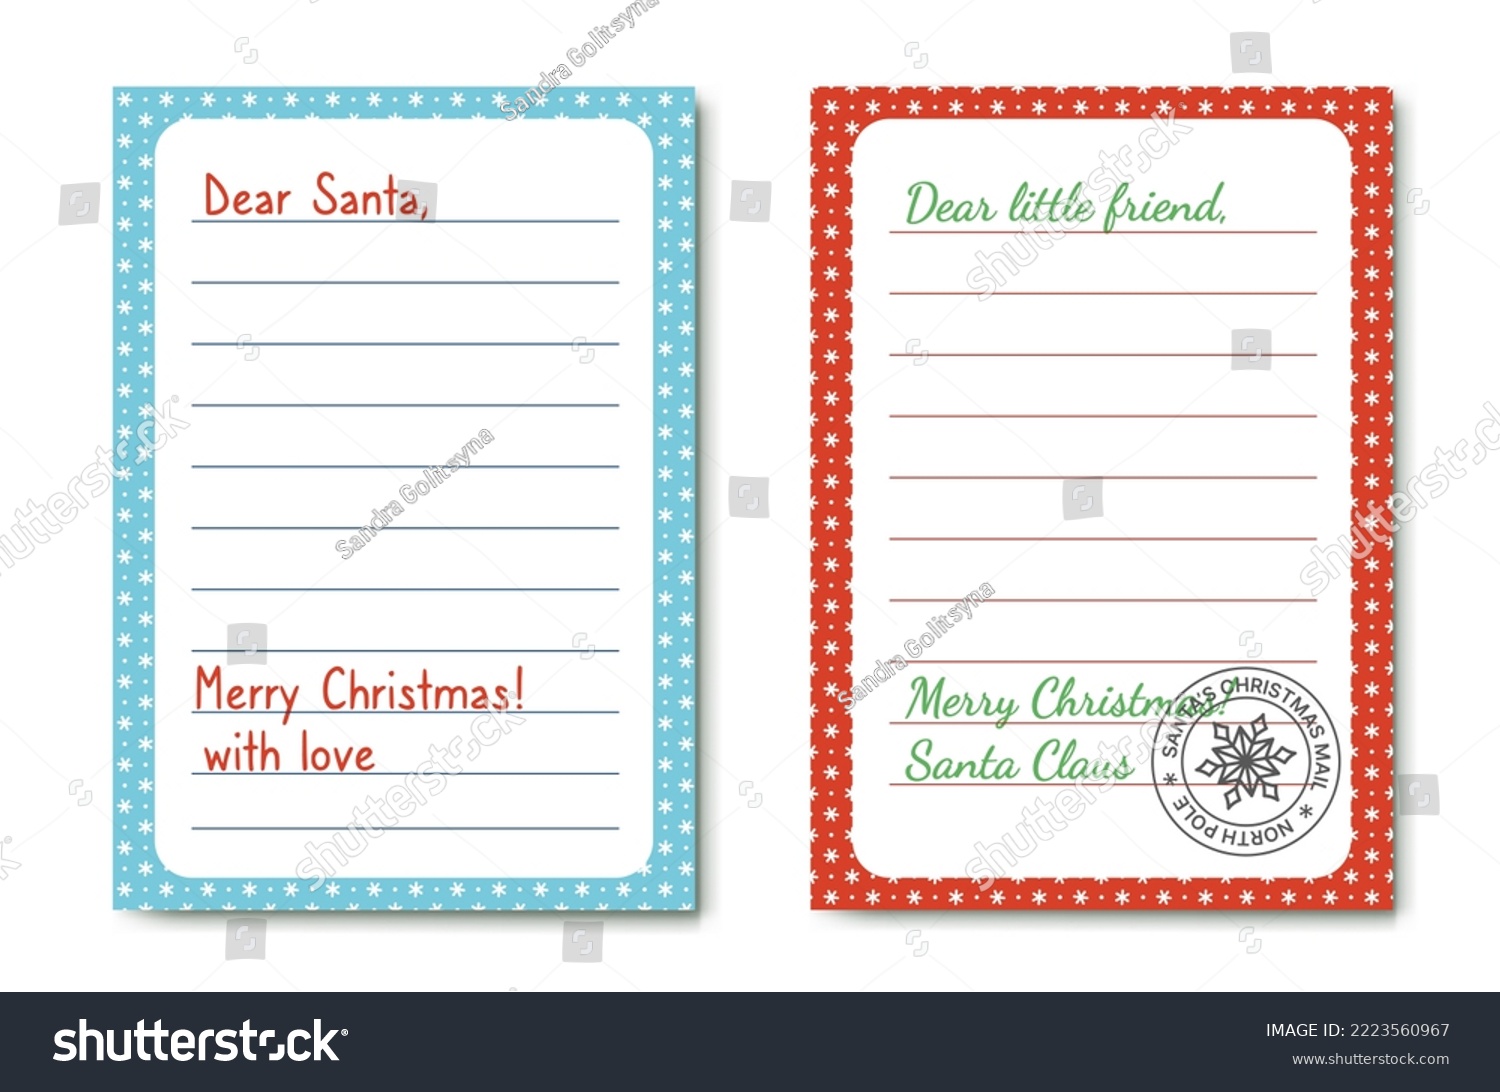 SVG of Dear little friend. Dear Santa. Christmas letters. Template. Flat, cartoon. Isolated vector illustration eps 10 svg